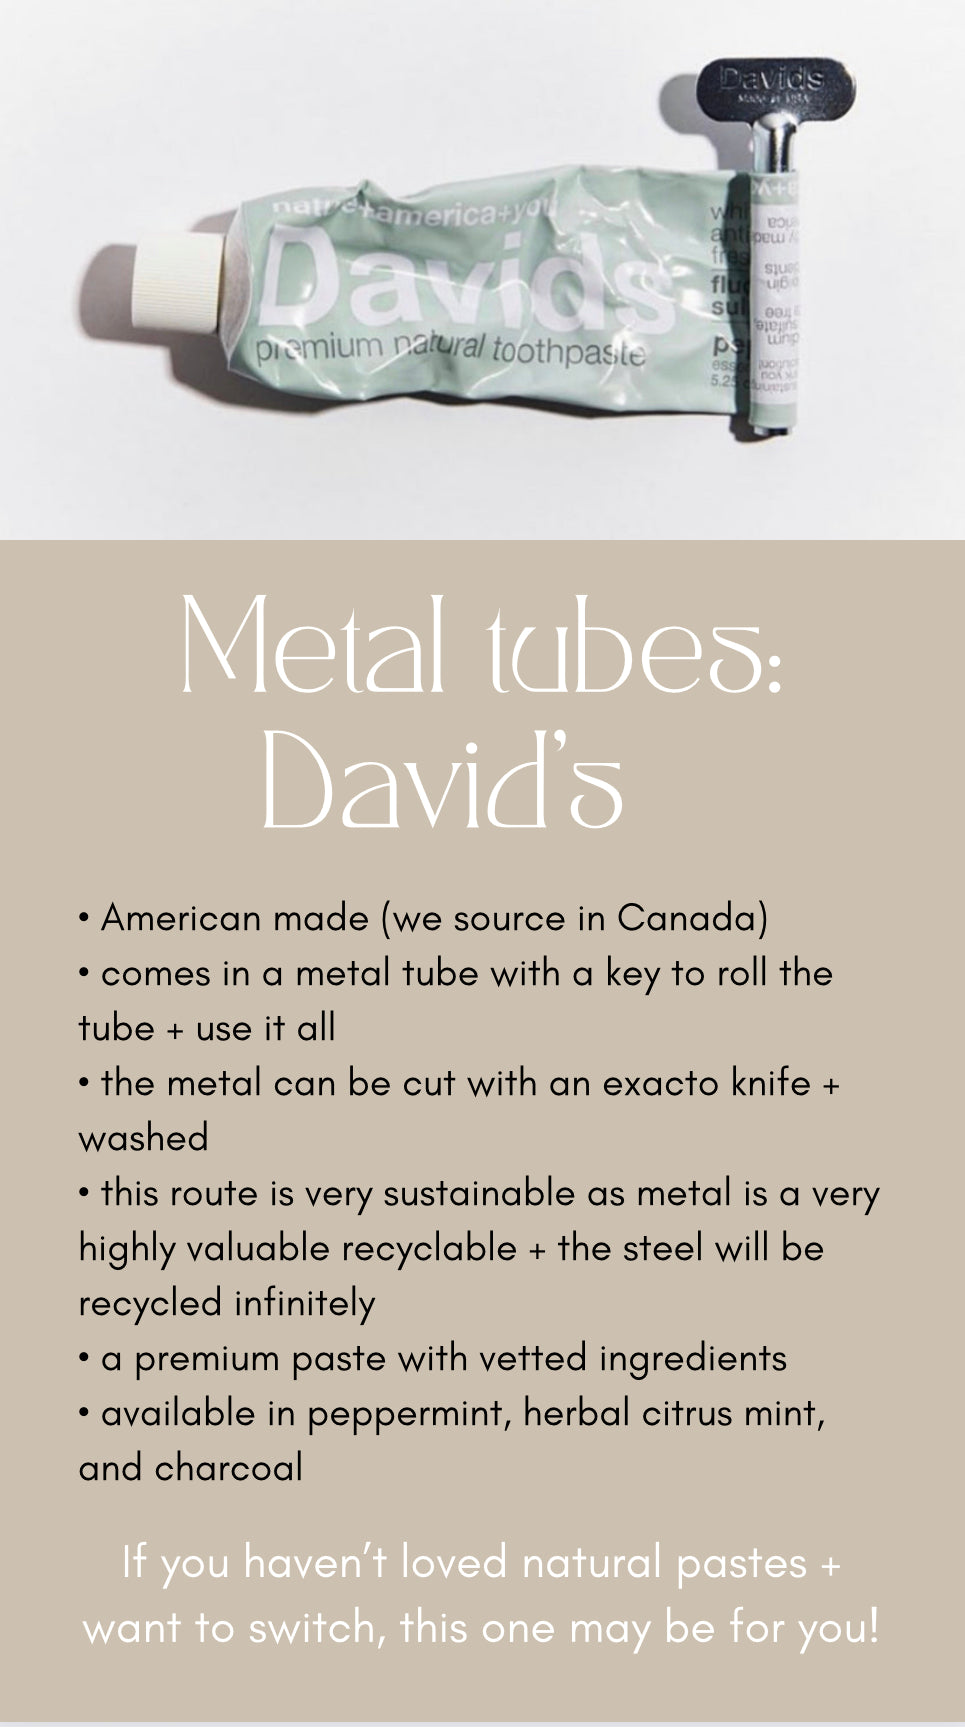 David's Premium Toothpastes | Metal Tubes